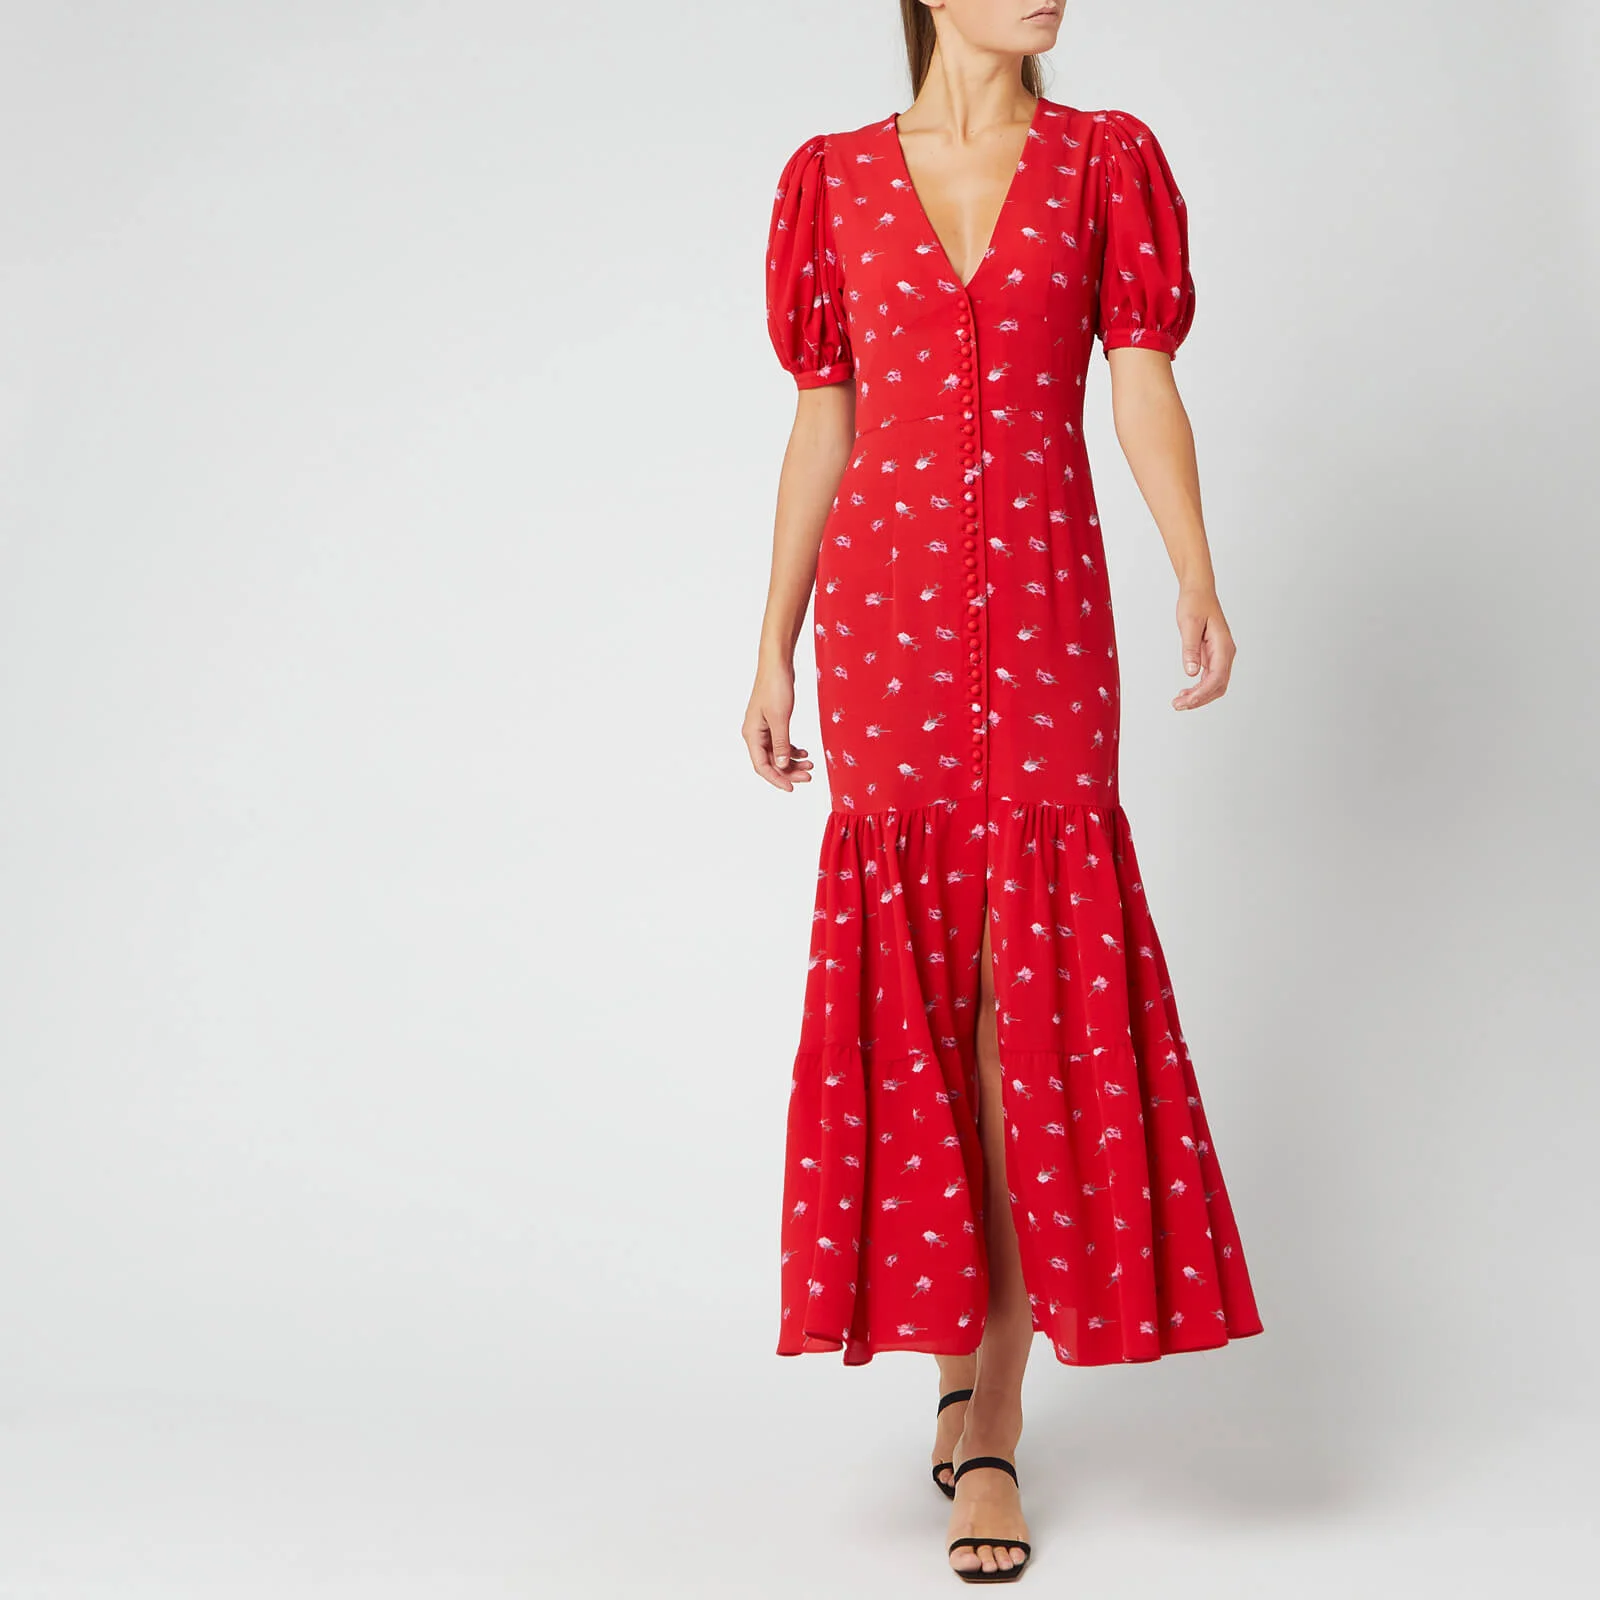 ROTATE Birger Christensen Women's Number 20 Dress - Poppy Red Combo Image 1